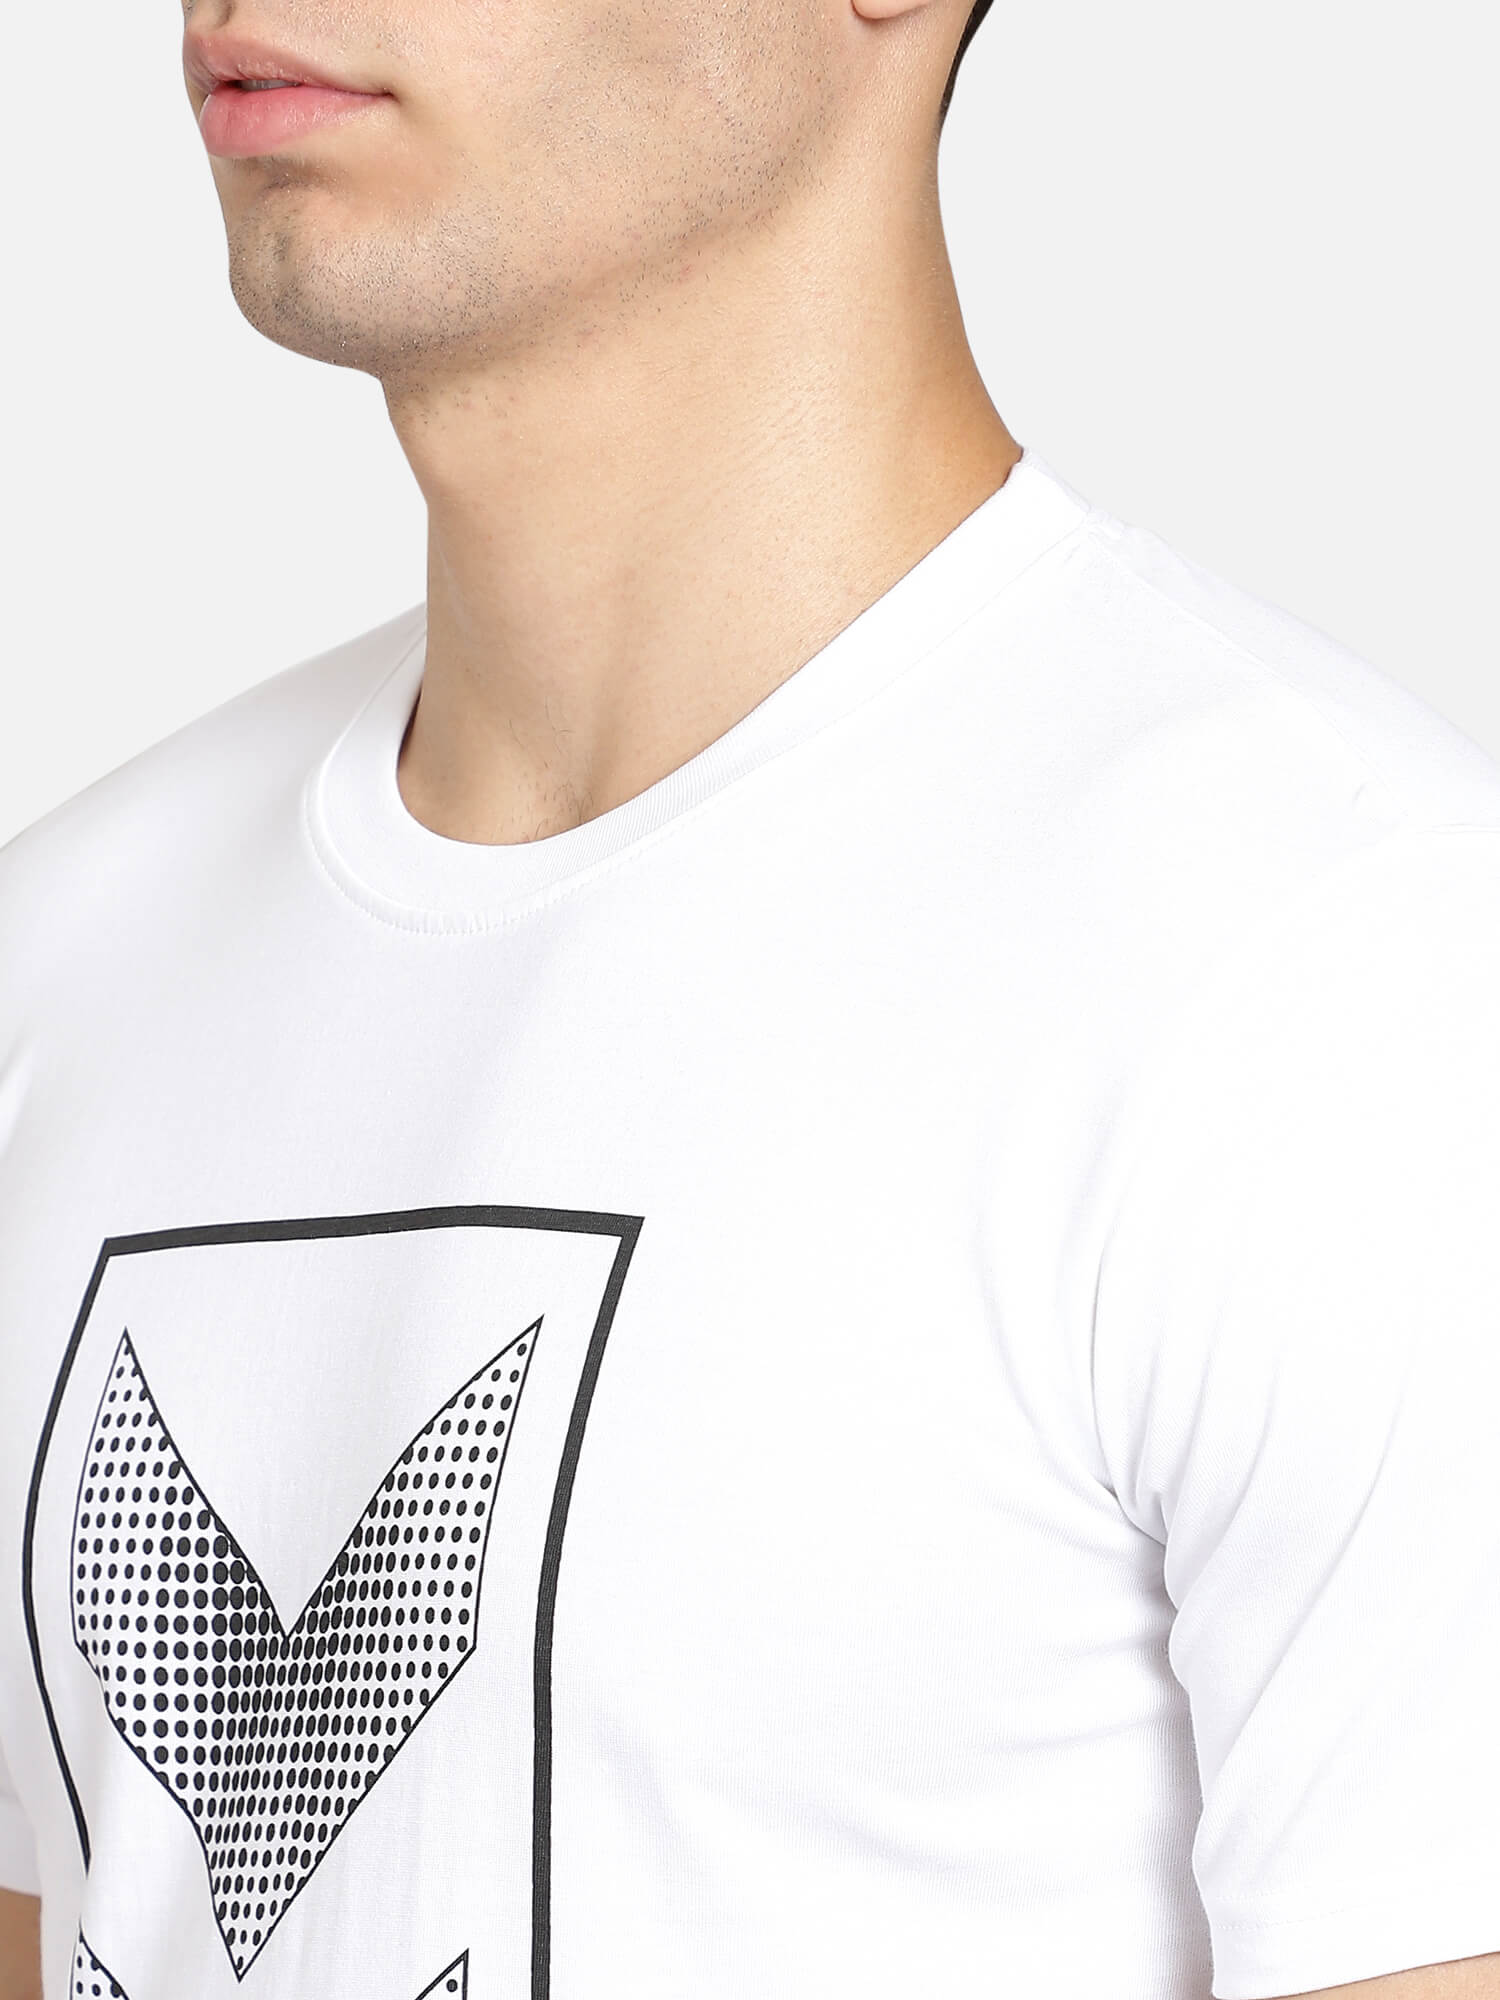 Sudo Logo White T-Shirts for Men